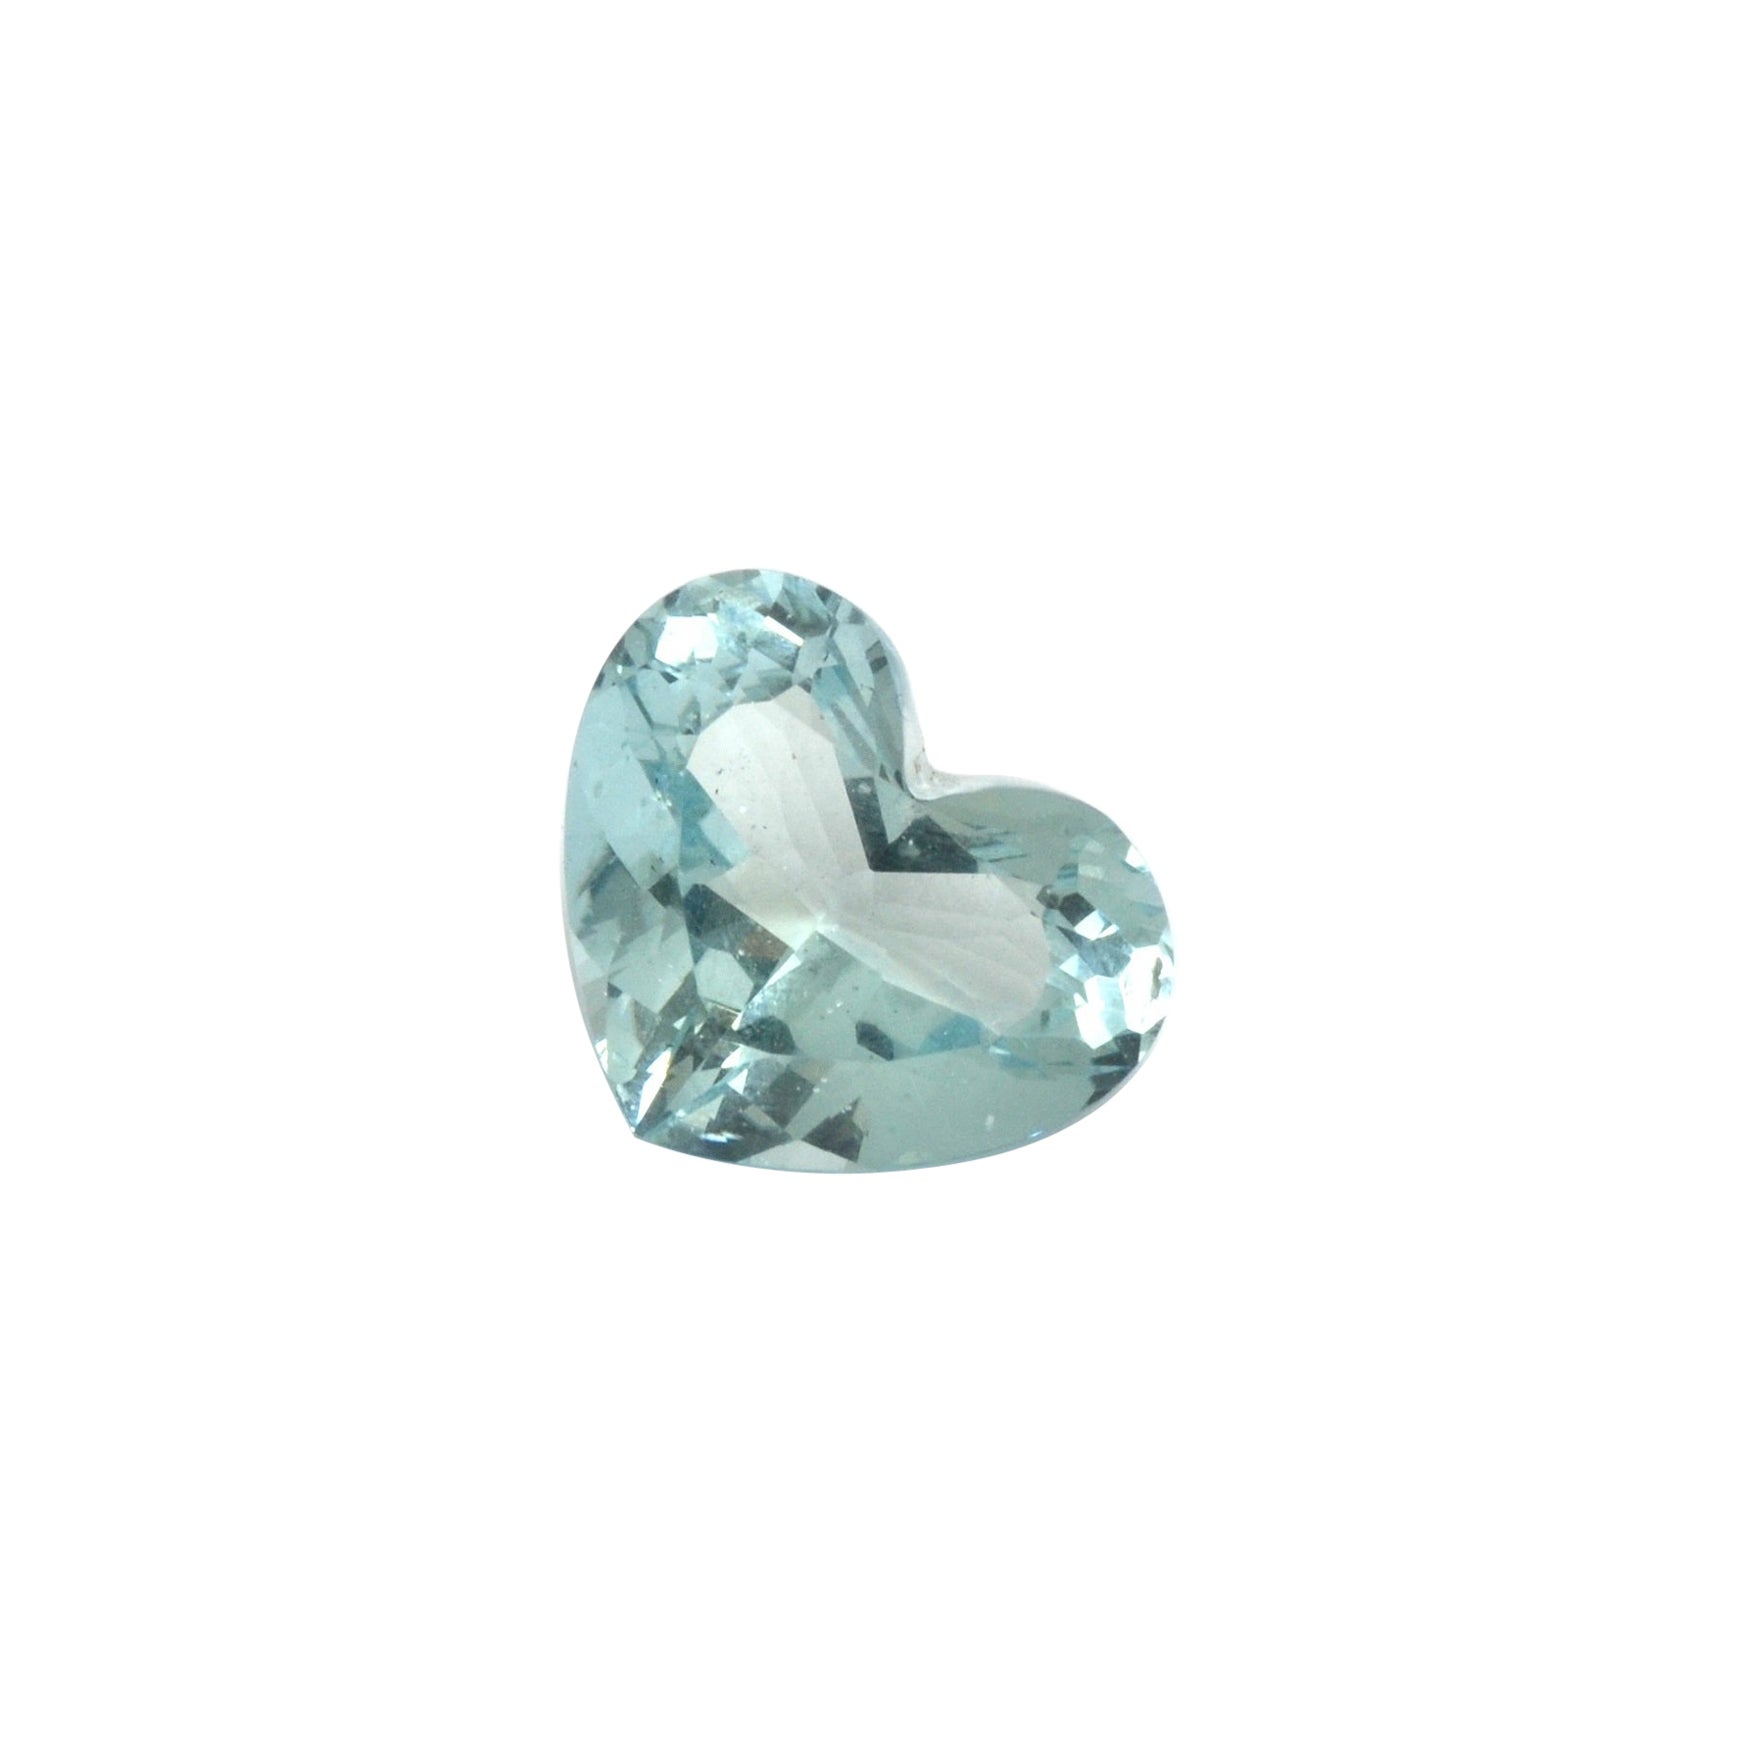 Aquamarine Heart Shape Gem 8.39 Carat Loose Stone For Sale